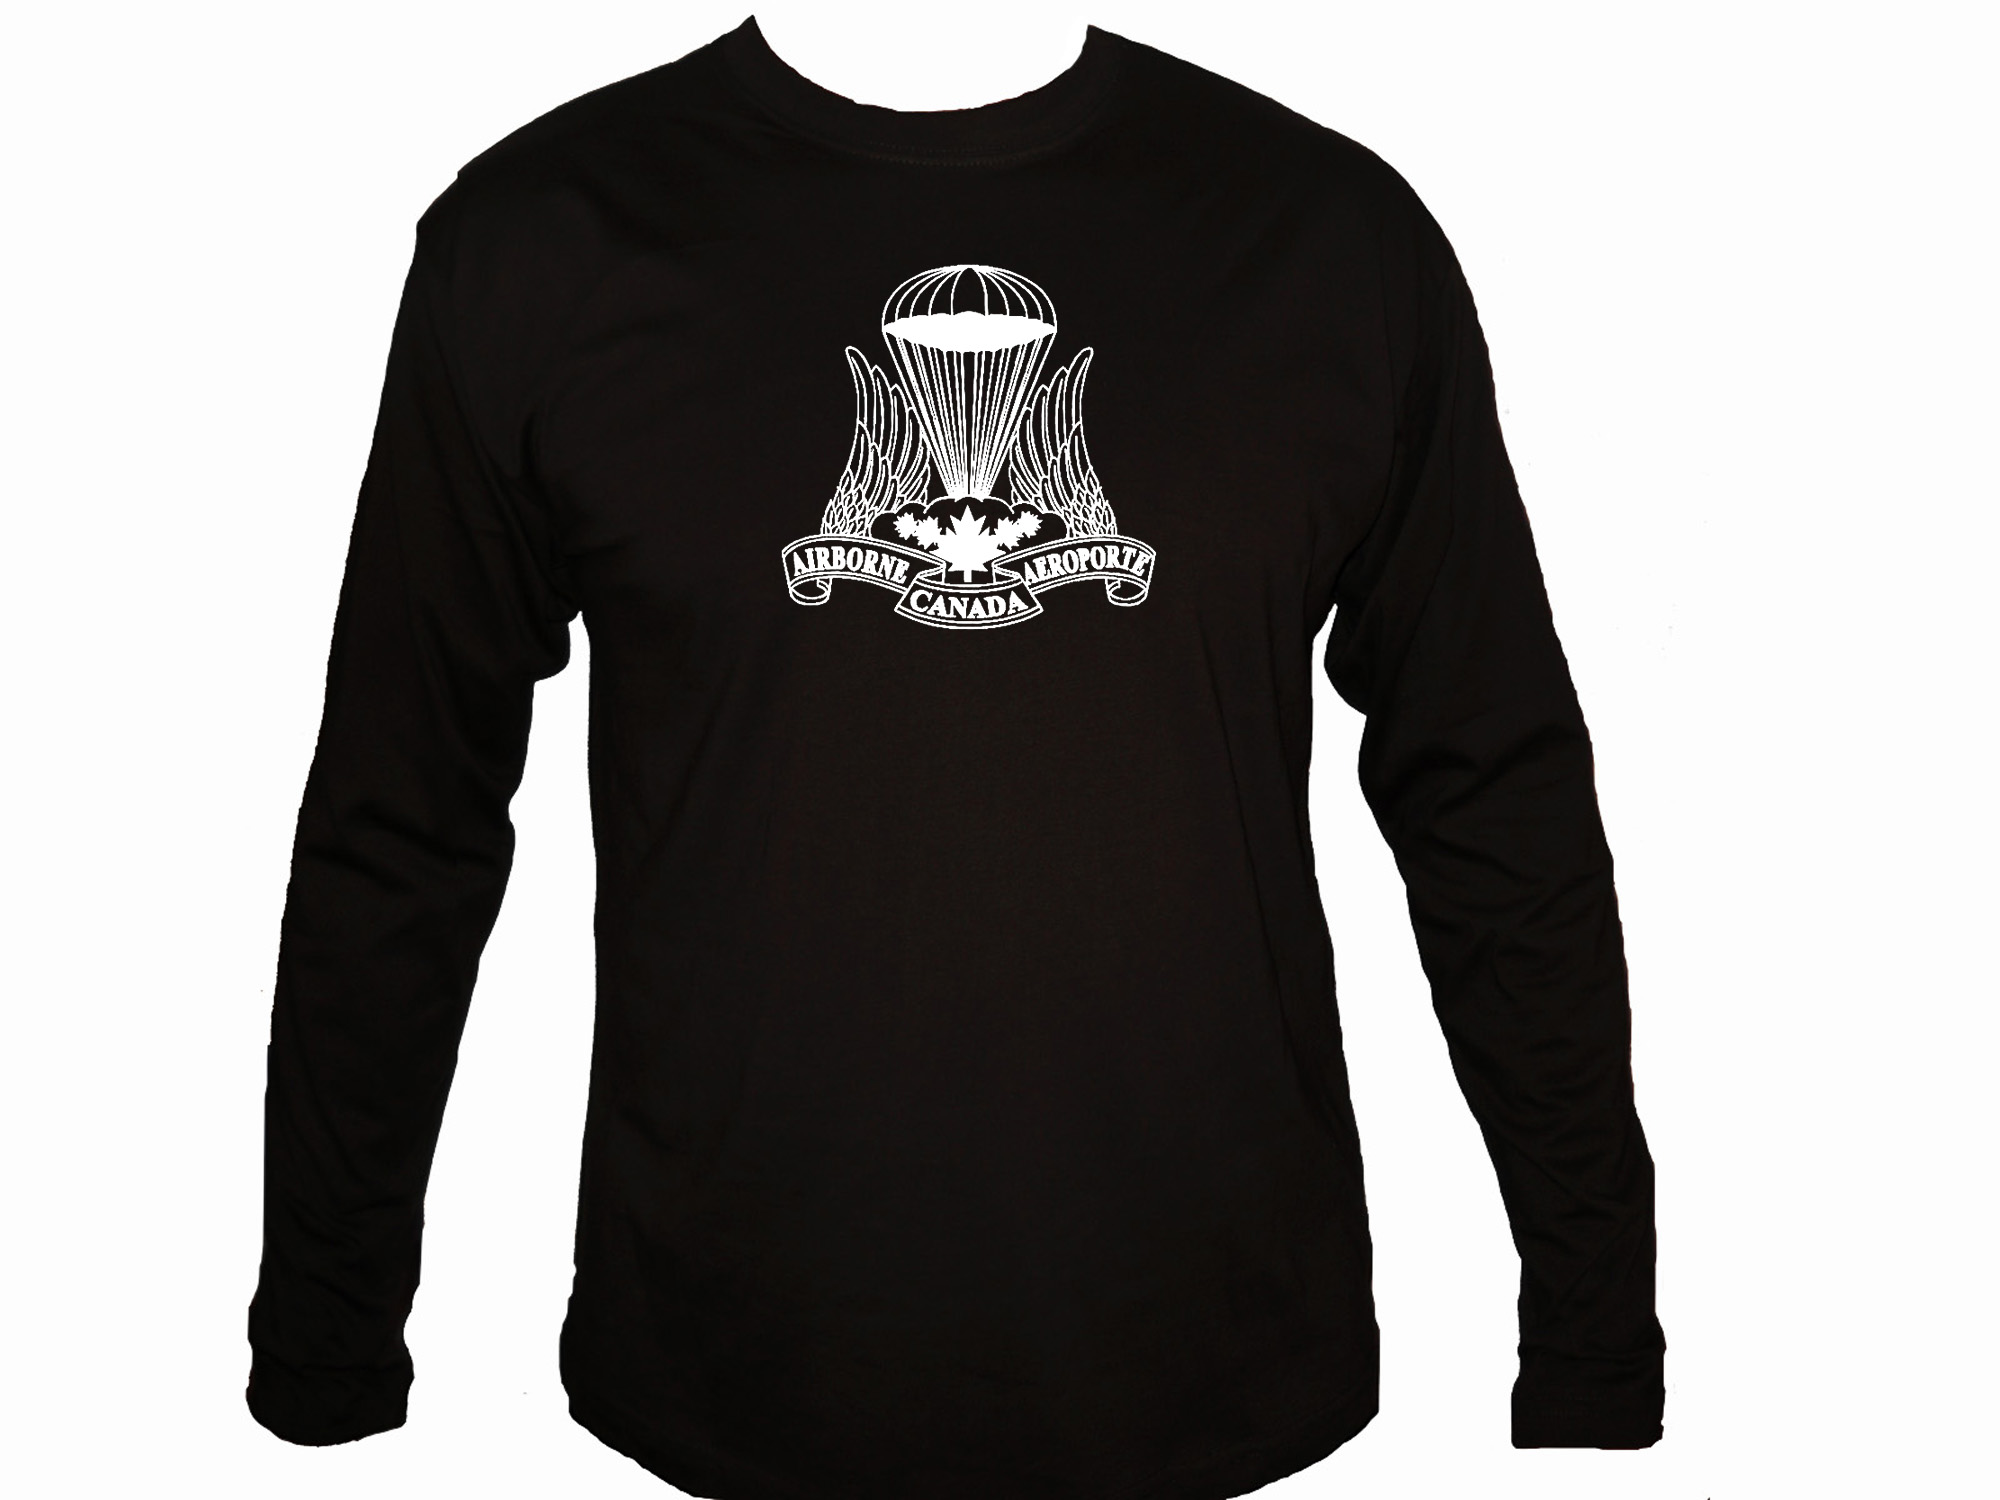 Canadian Airborne Regiment retro symbol sleeved t-shirt